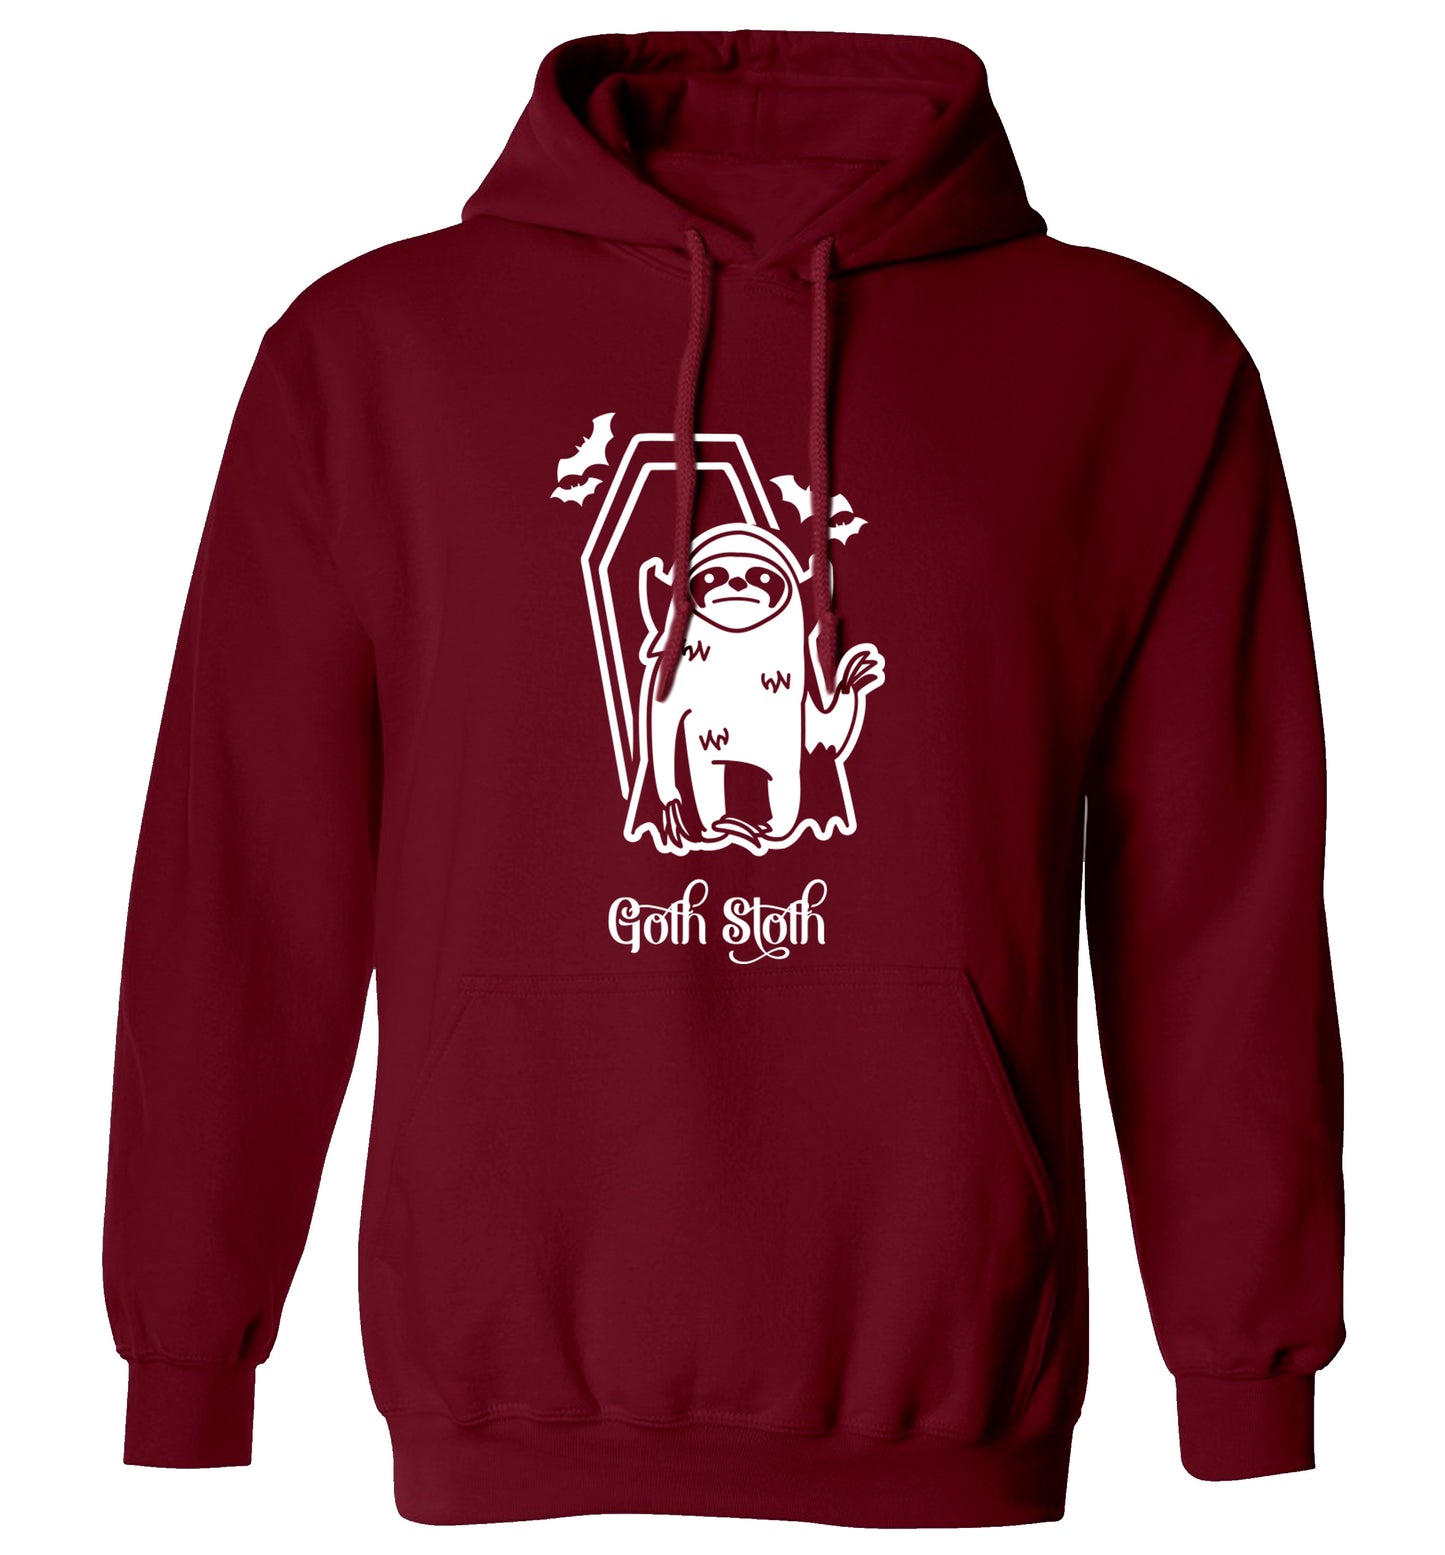 Goth Sloth adults unisex maroon hoodie 2XL